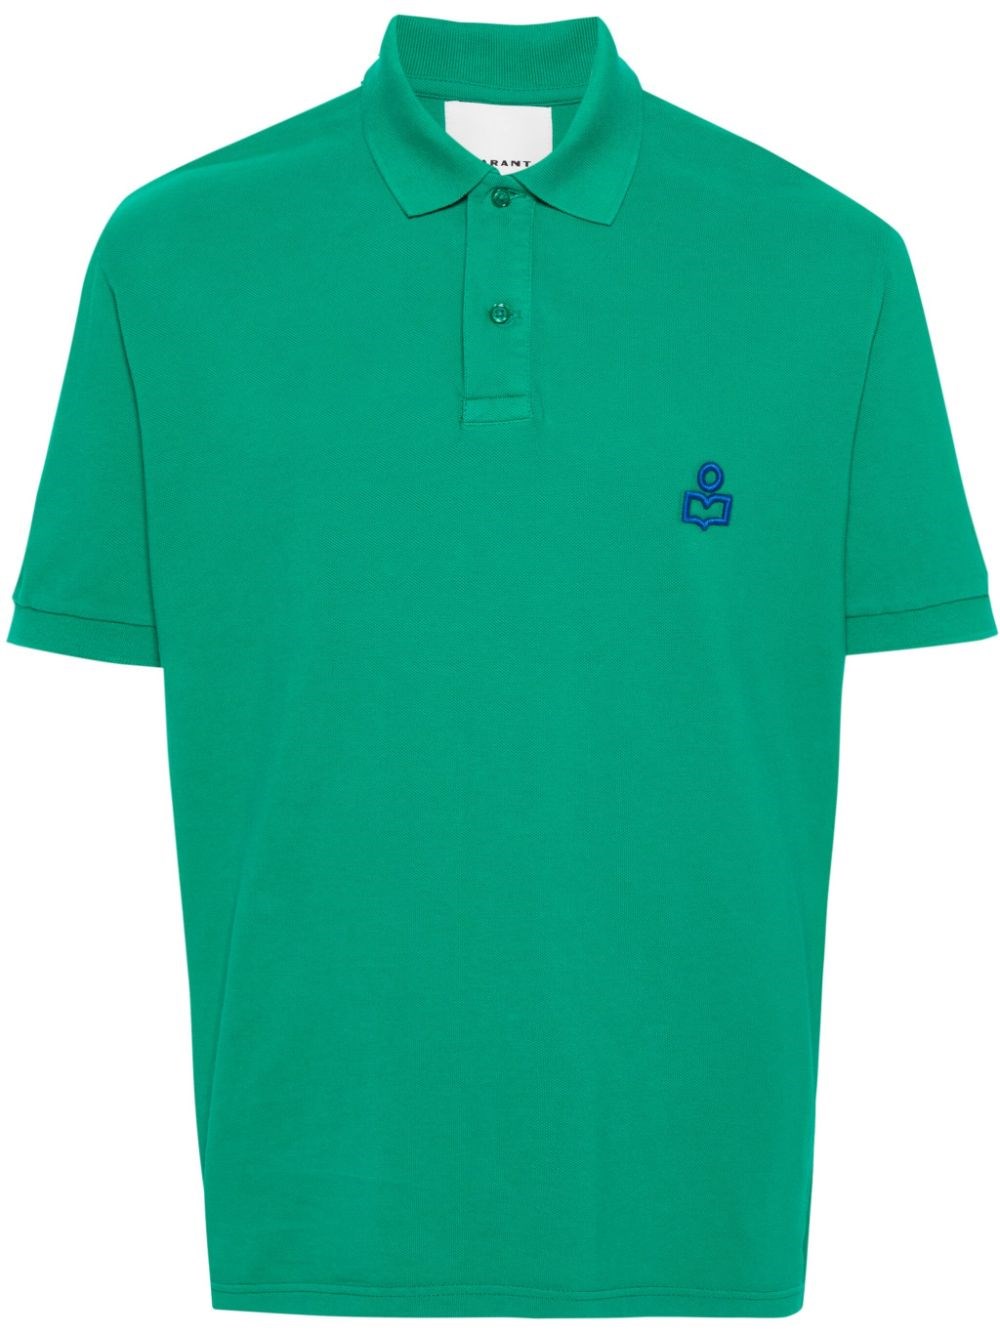 Marant Afko Cotton Polo Shirt In Green